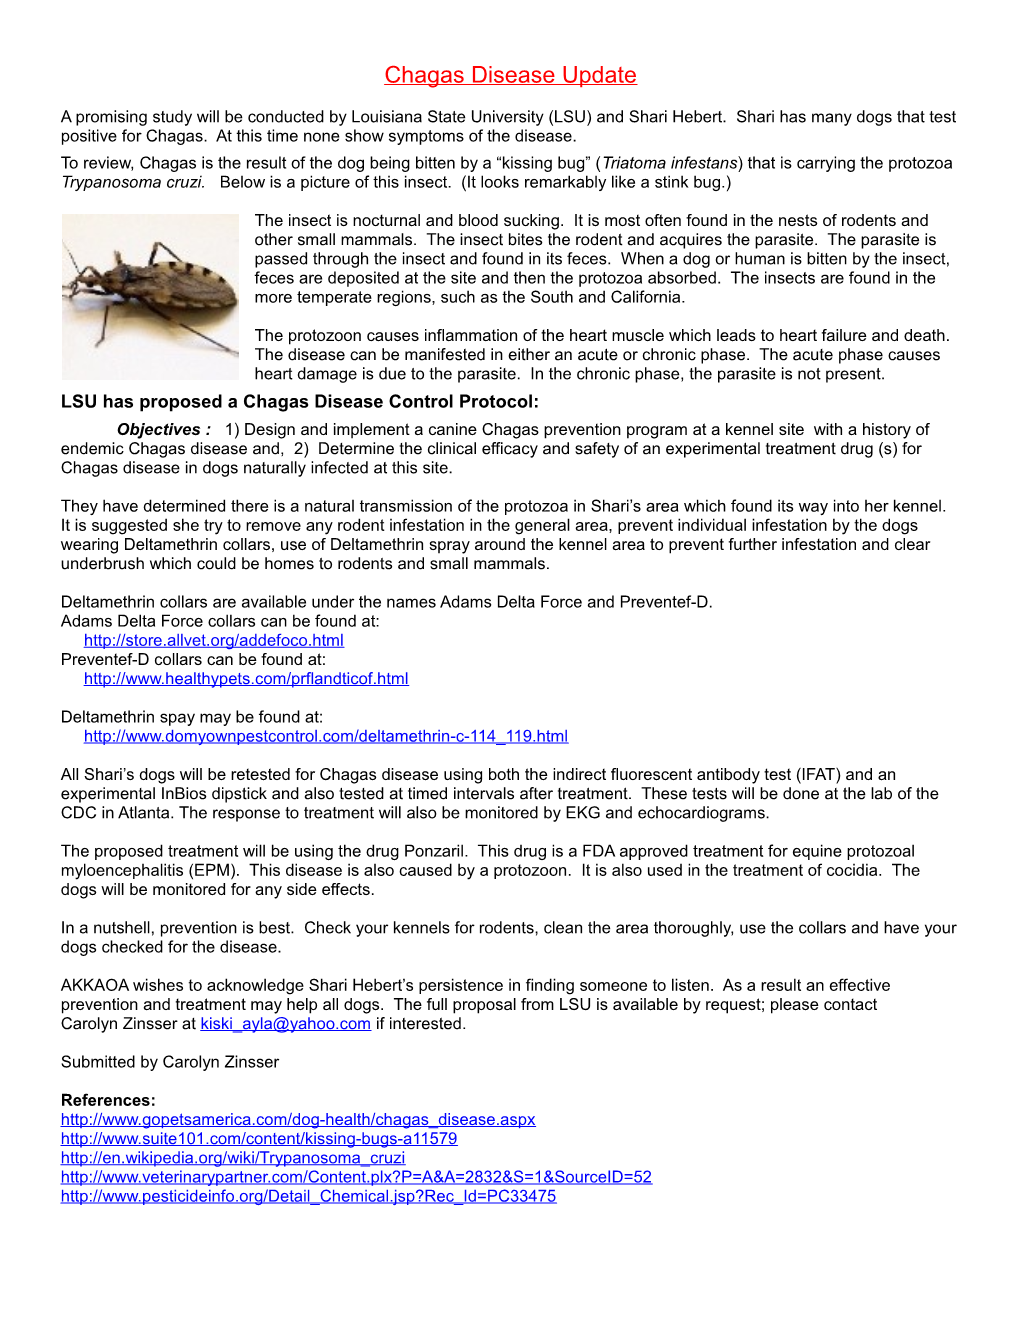 LSU Has Proposed a Chagas Disease Control Protocol